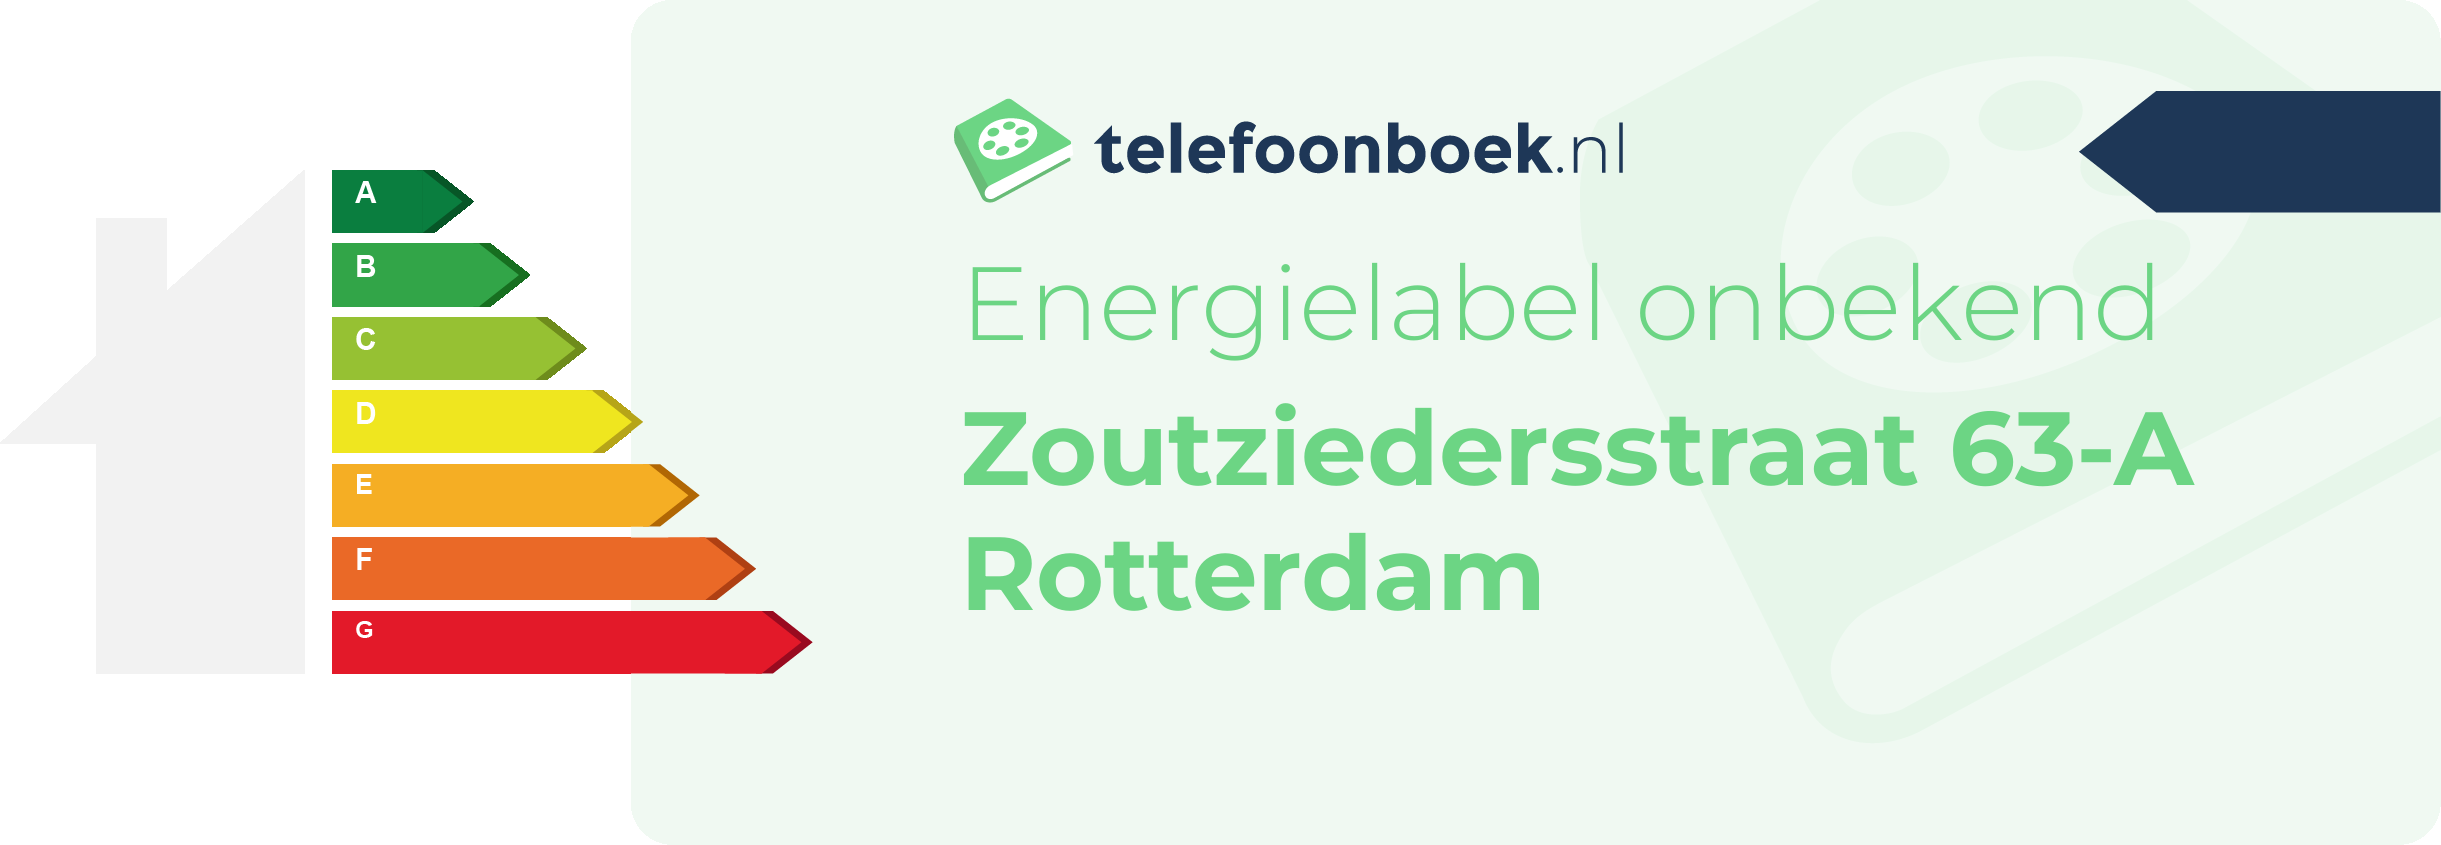 Energielabel Zoutziedersstraat 63-A Rotterdam